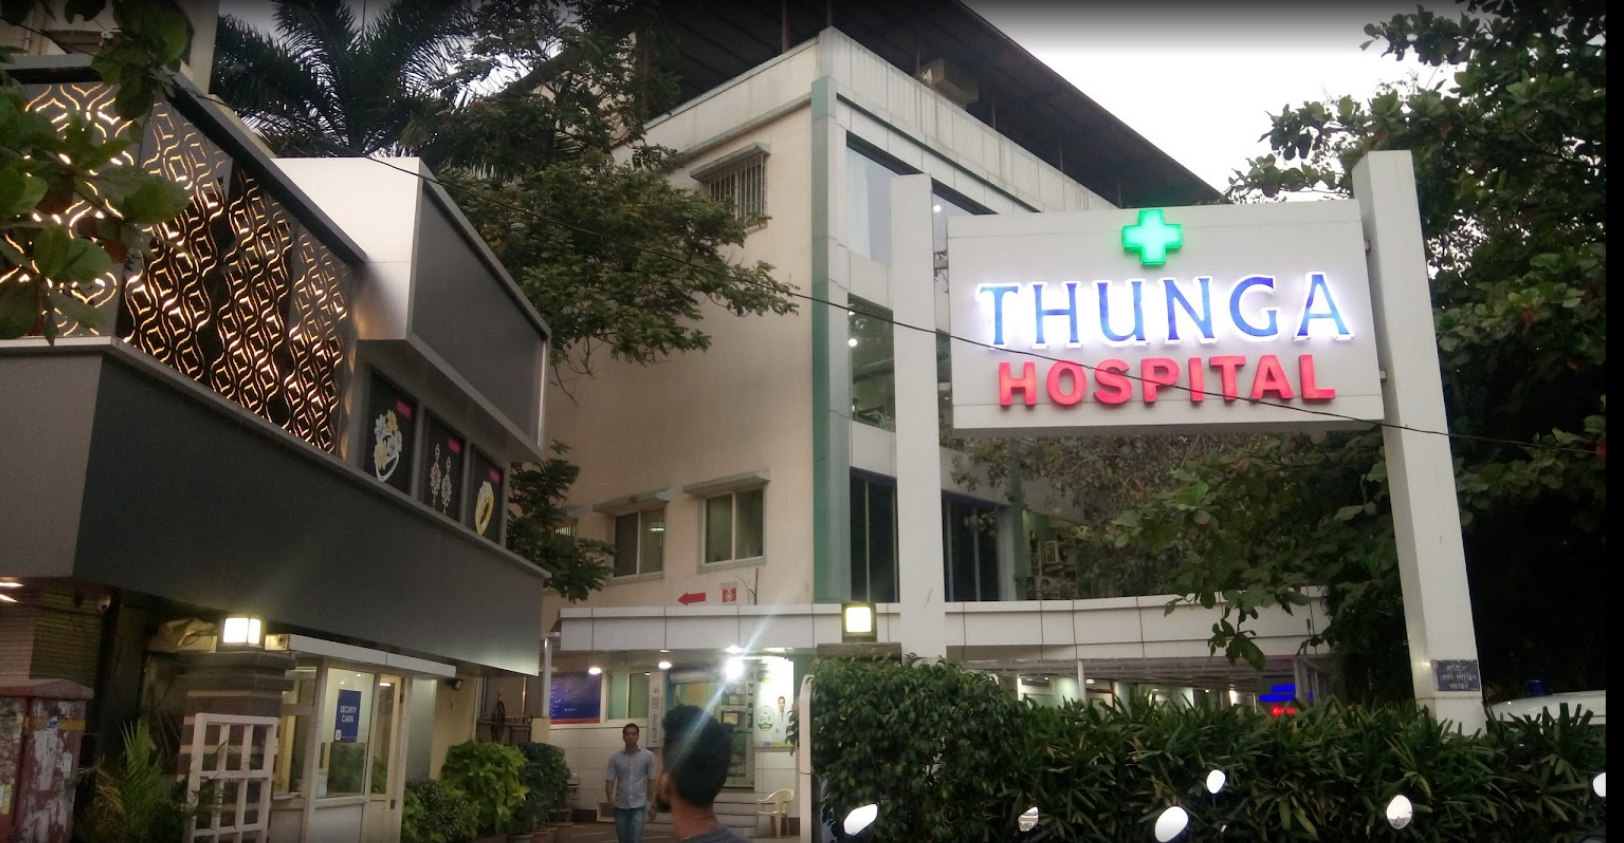 Thunga Hospital photo